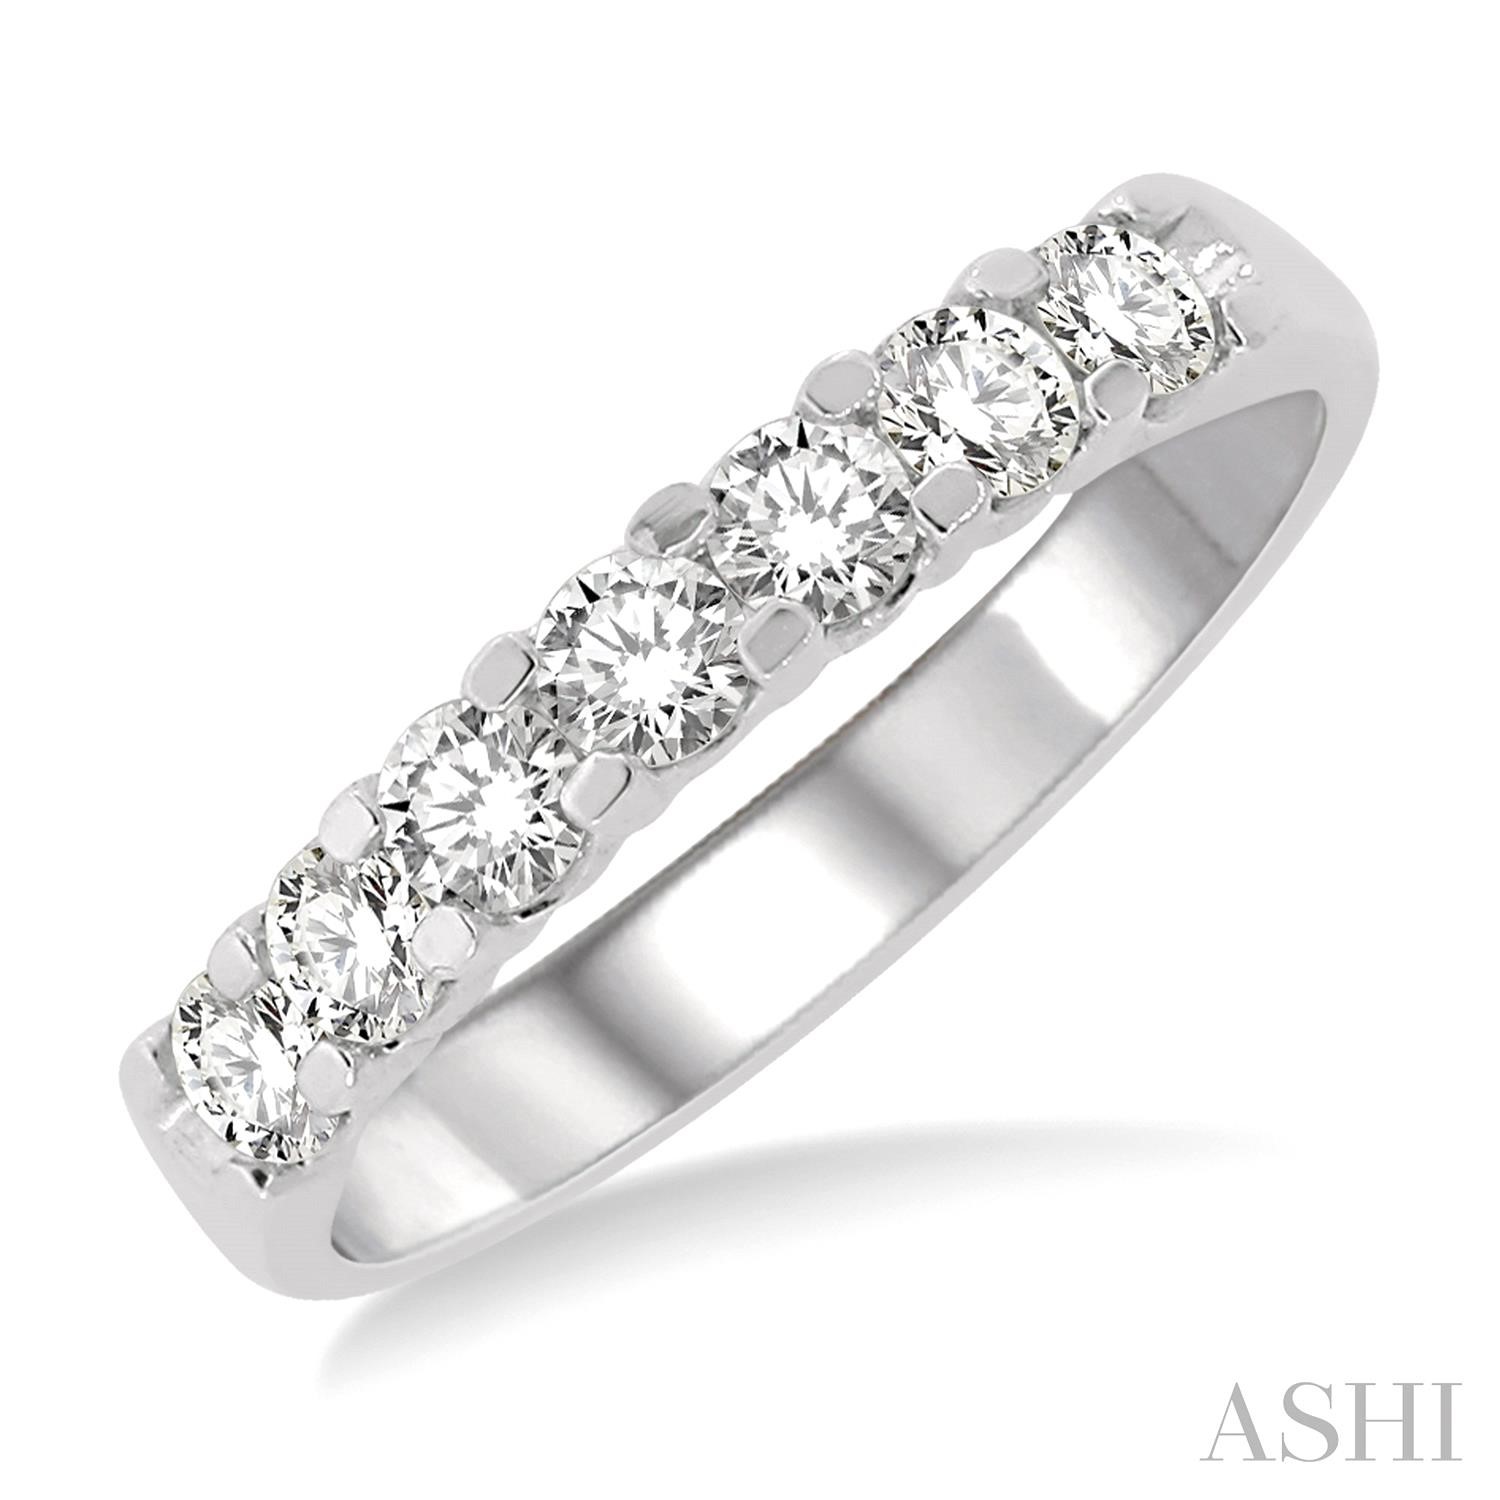 14 Karat White Gold Shared Prong Wedding Band With 7=0.75Tw Round Diamonds
Ring Size: 6.5